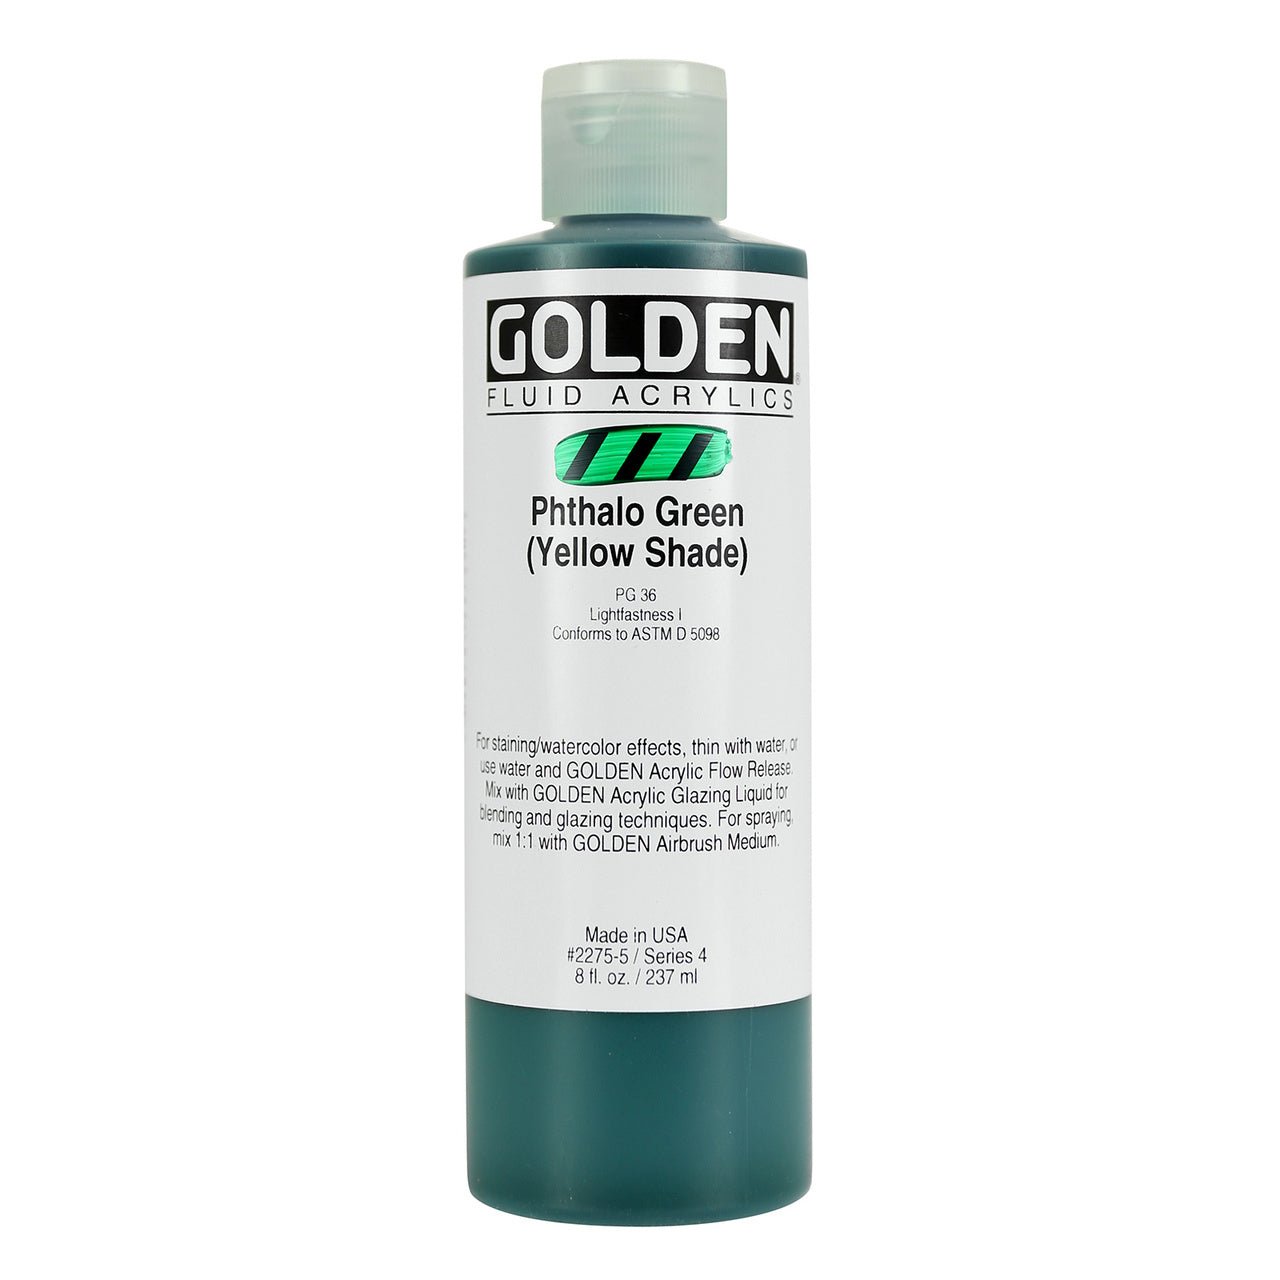 Golden Fluid Acrylic Phthalo Green (yellow shade) 8 oz - merriartist.com